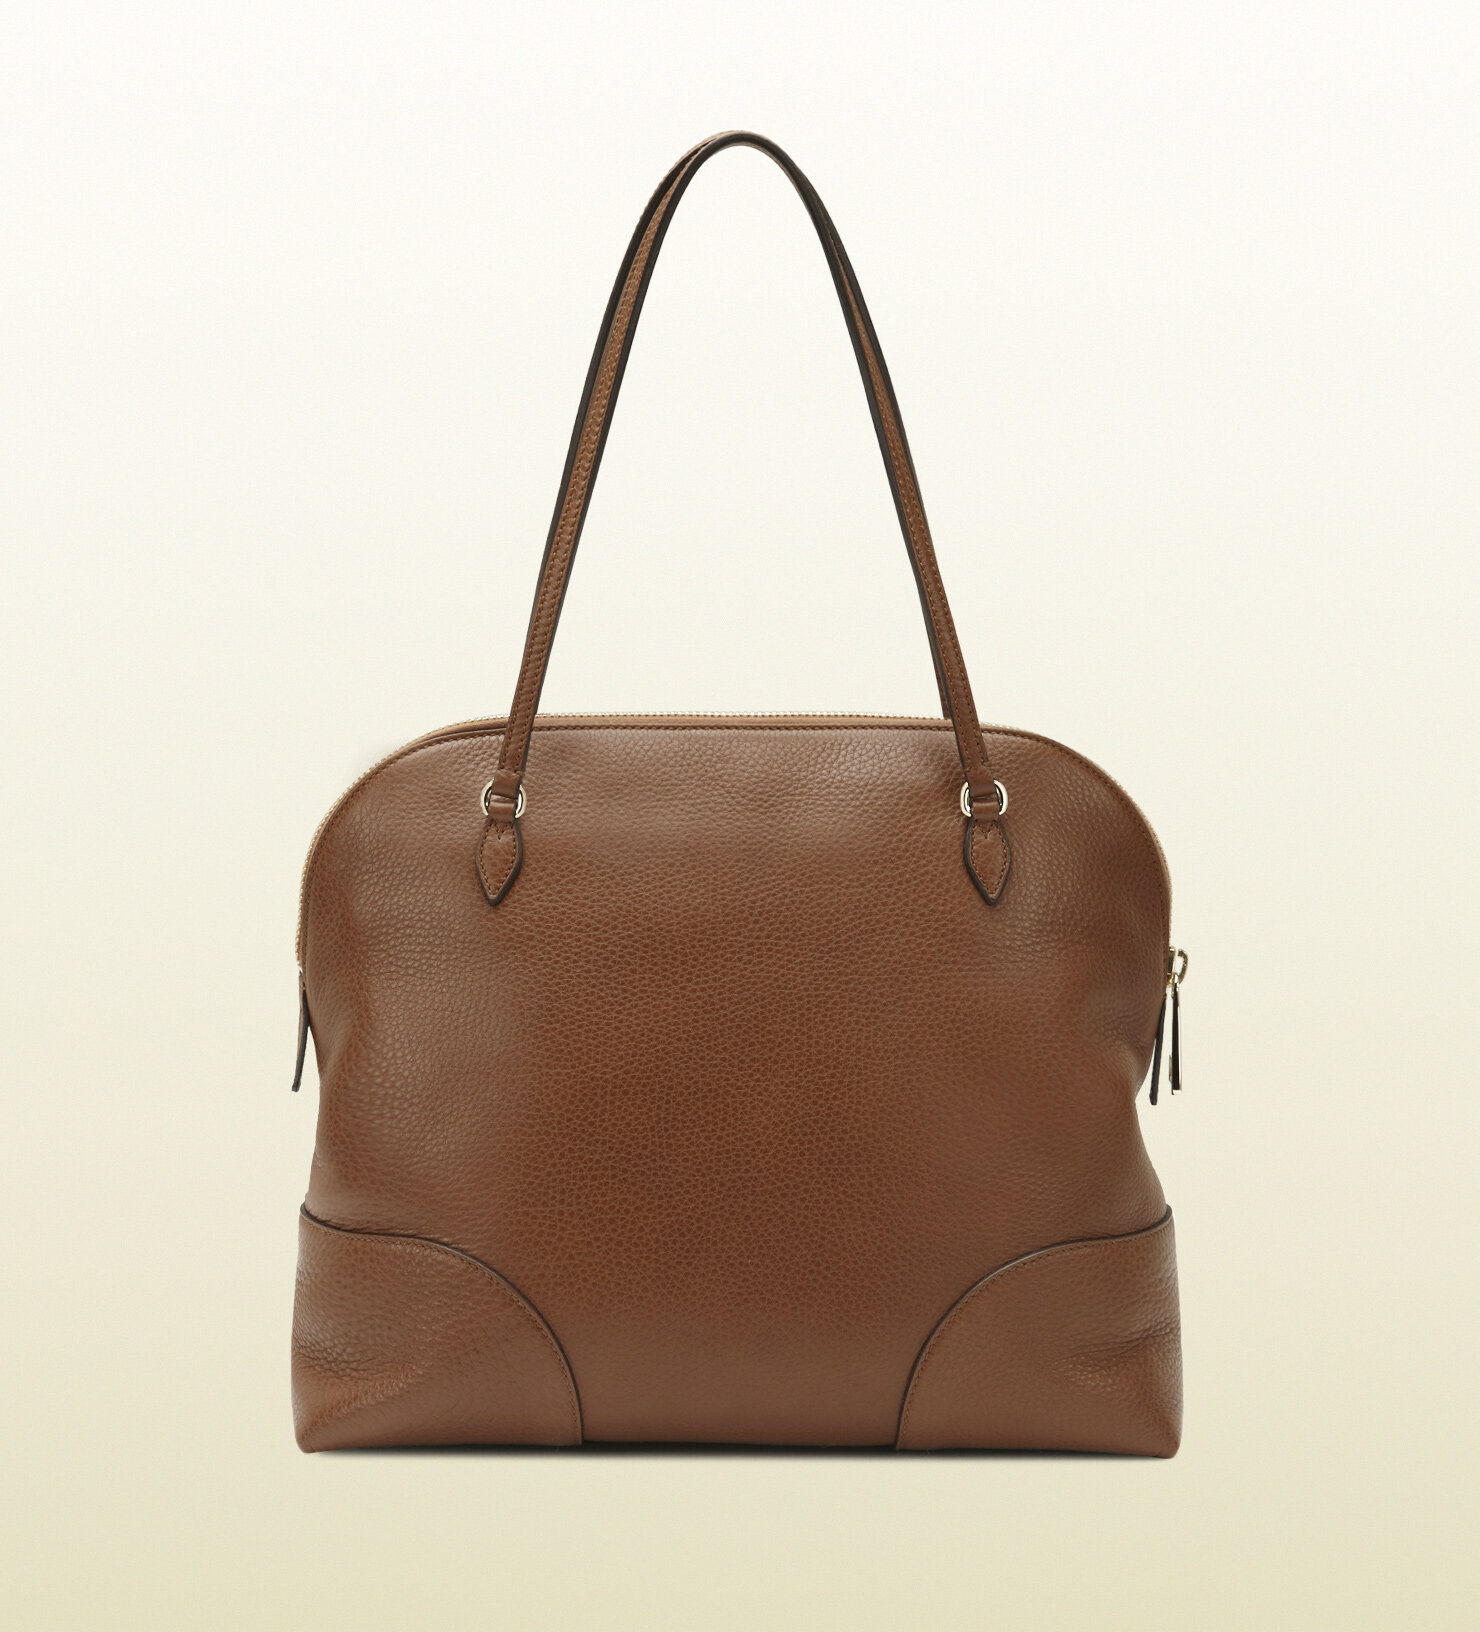 Gucci Bree Shoulder Bag in Brown Leather.jpg